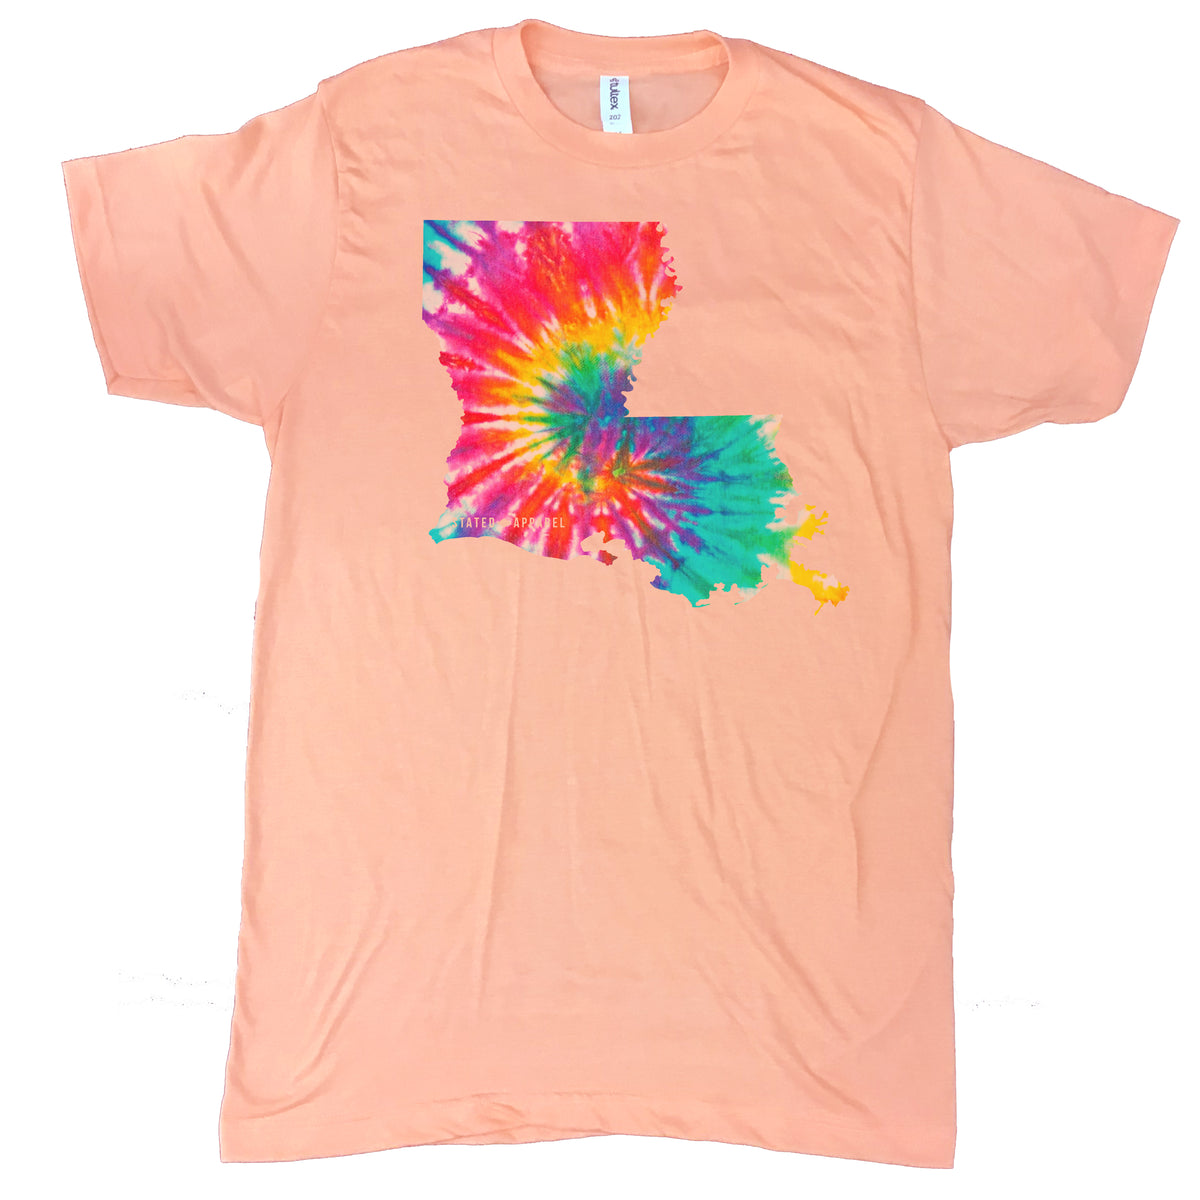 Louisiana State Tie-Dye Shirt